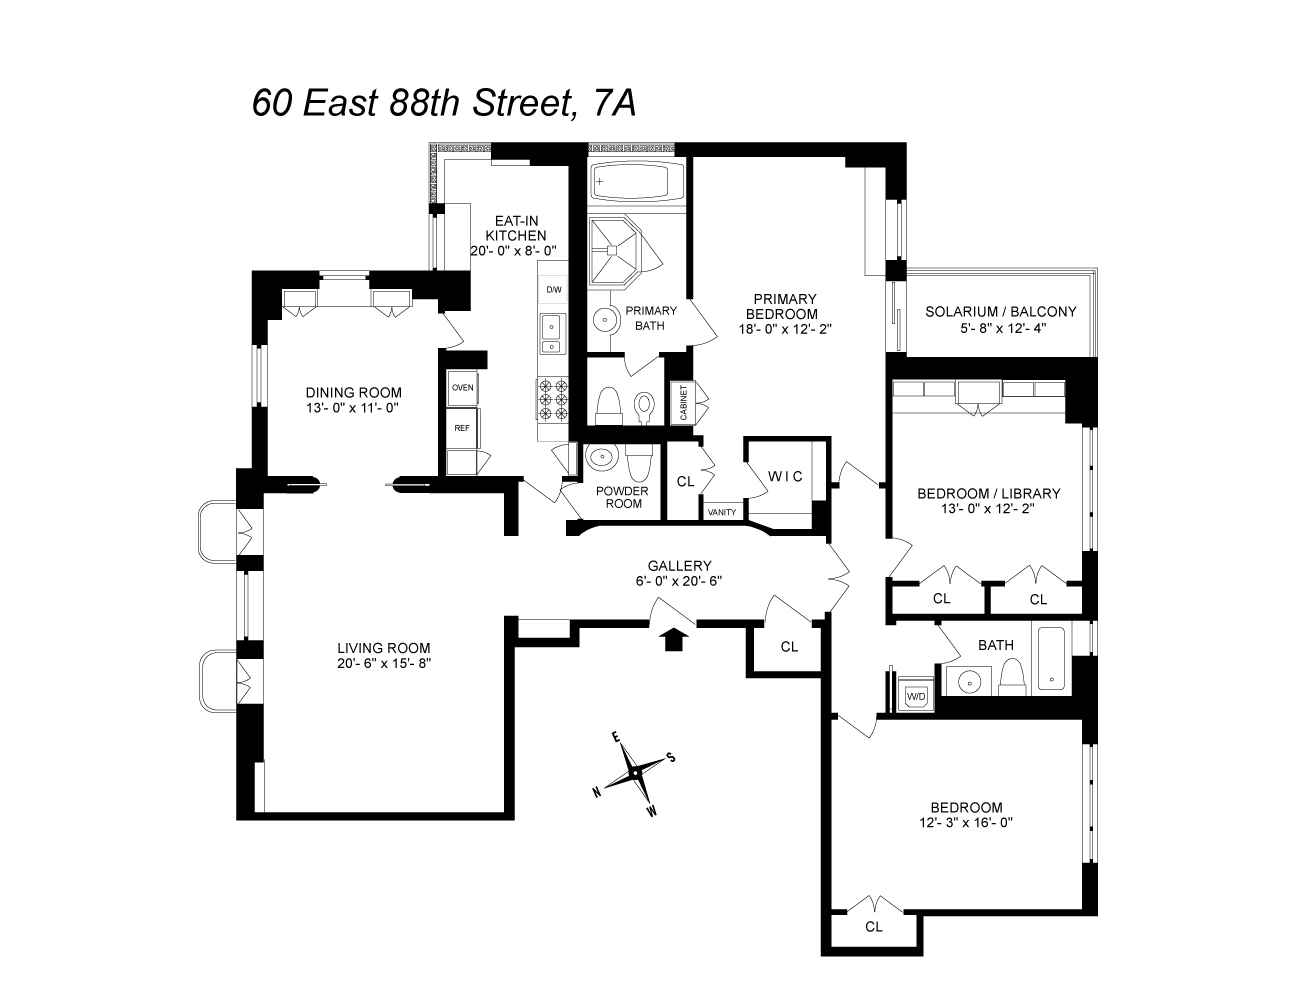 Floorplan for 60 East 88th Street, 7A